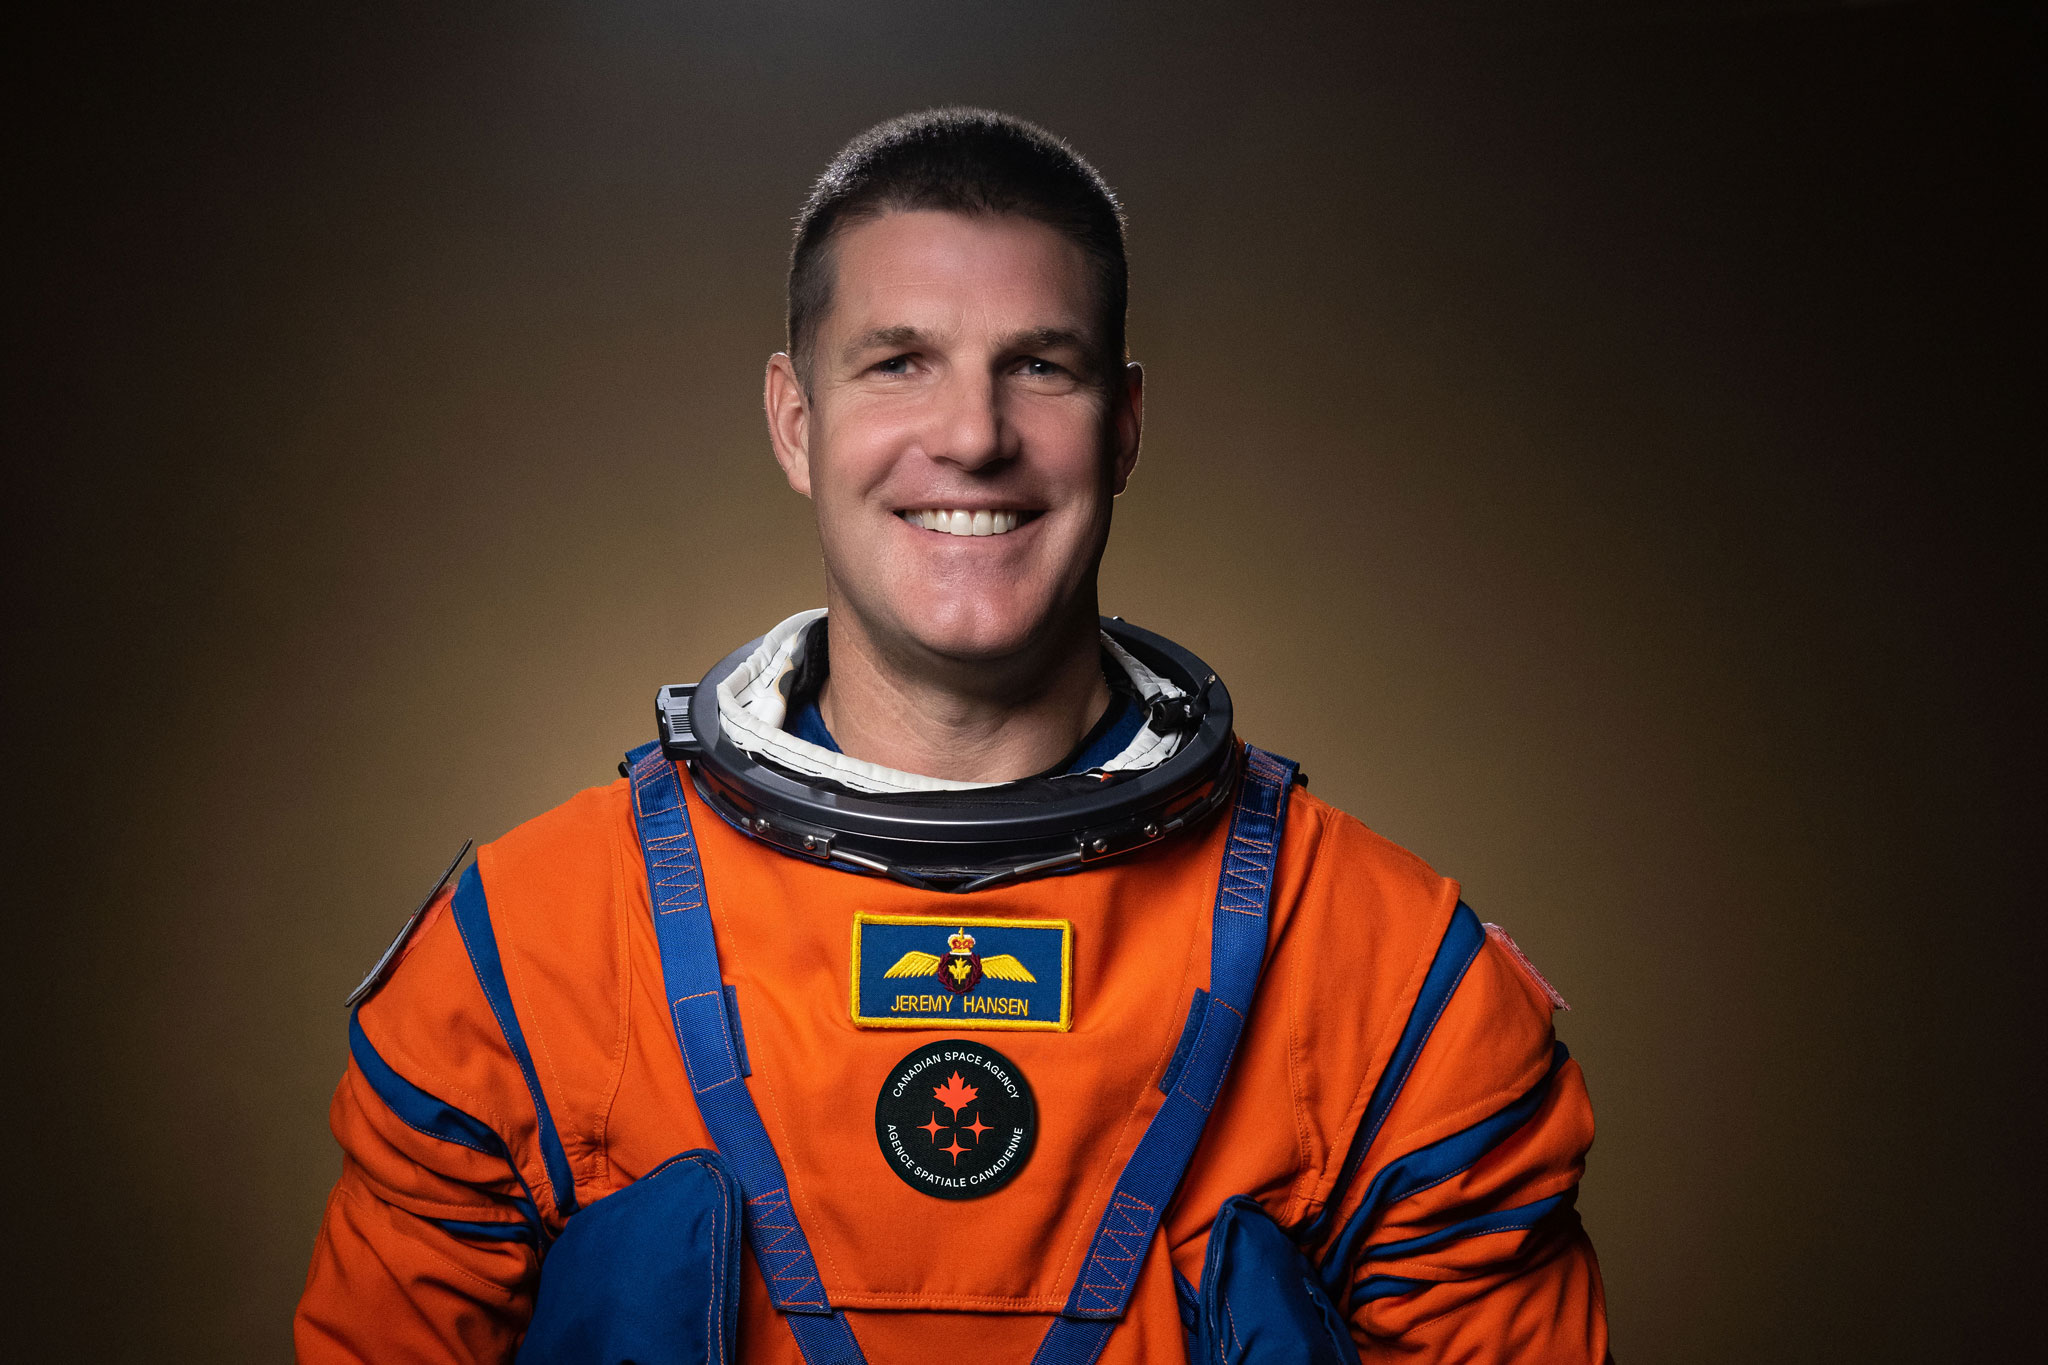 astronaut jeremy hansen niagara falls